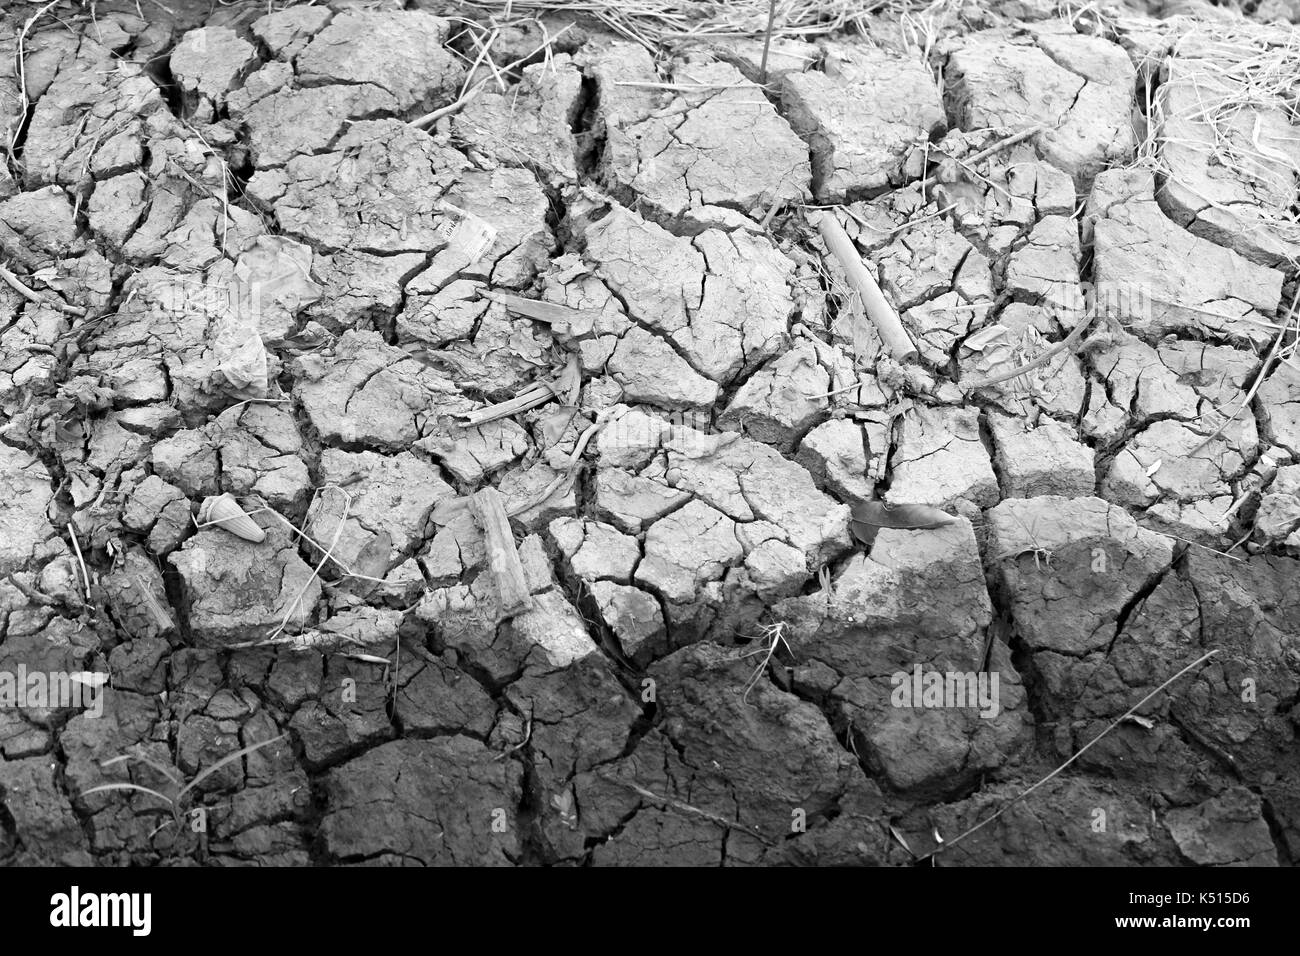 Arid nature. Closeup Crack soil black and white texture background. Stock Photo